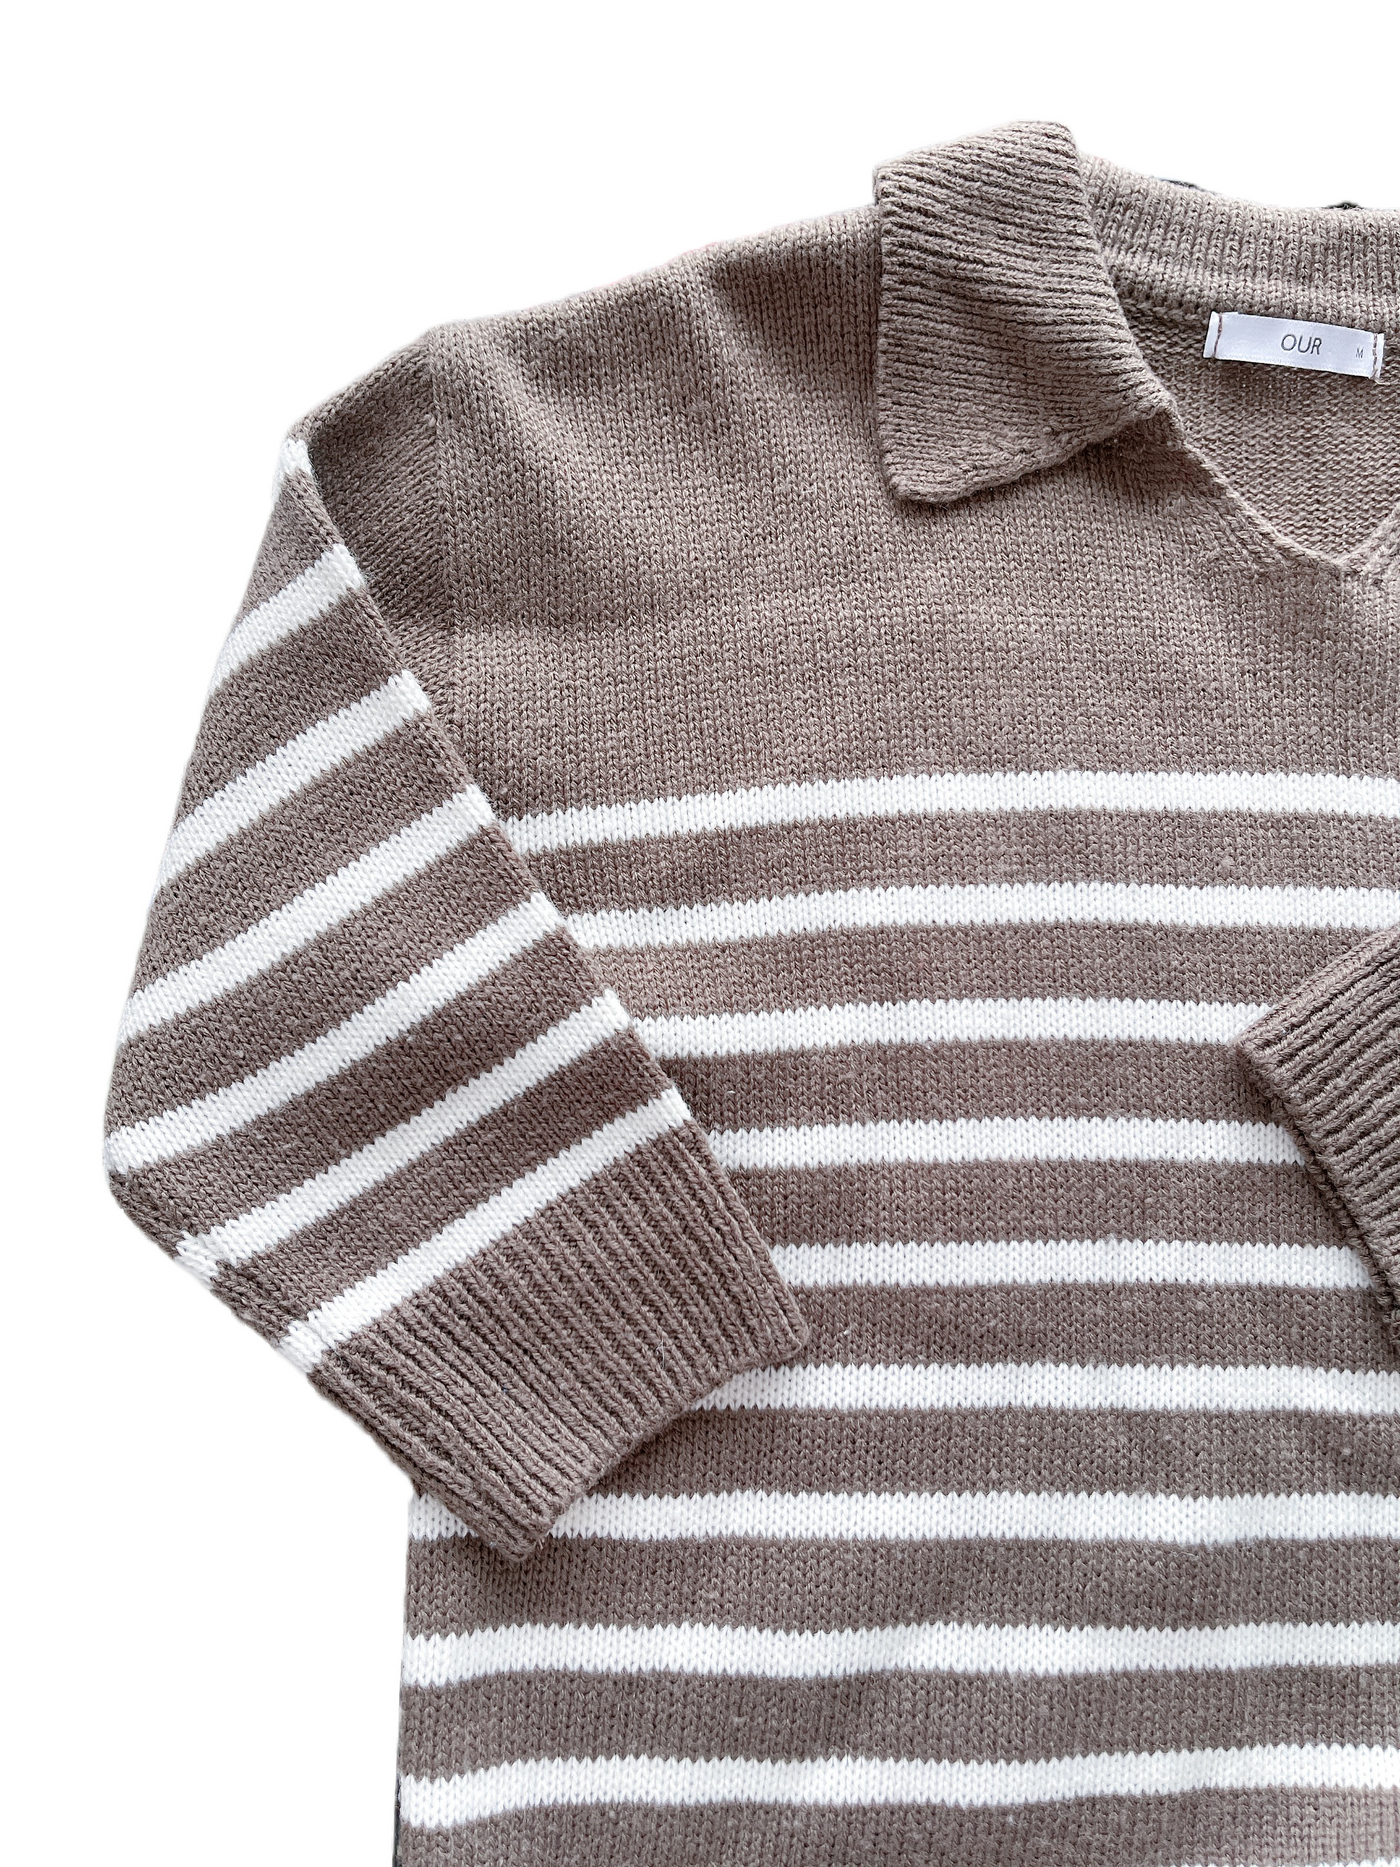 OUR Boy Sweater(6Y)